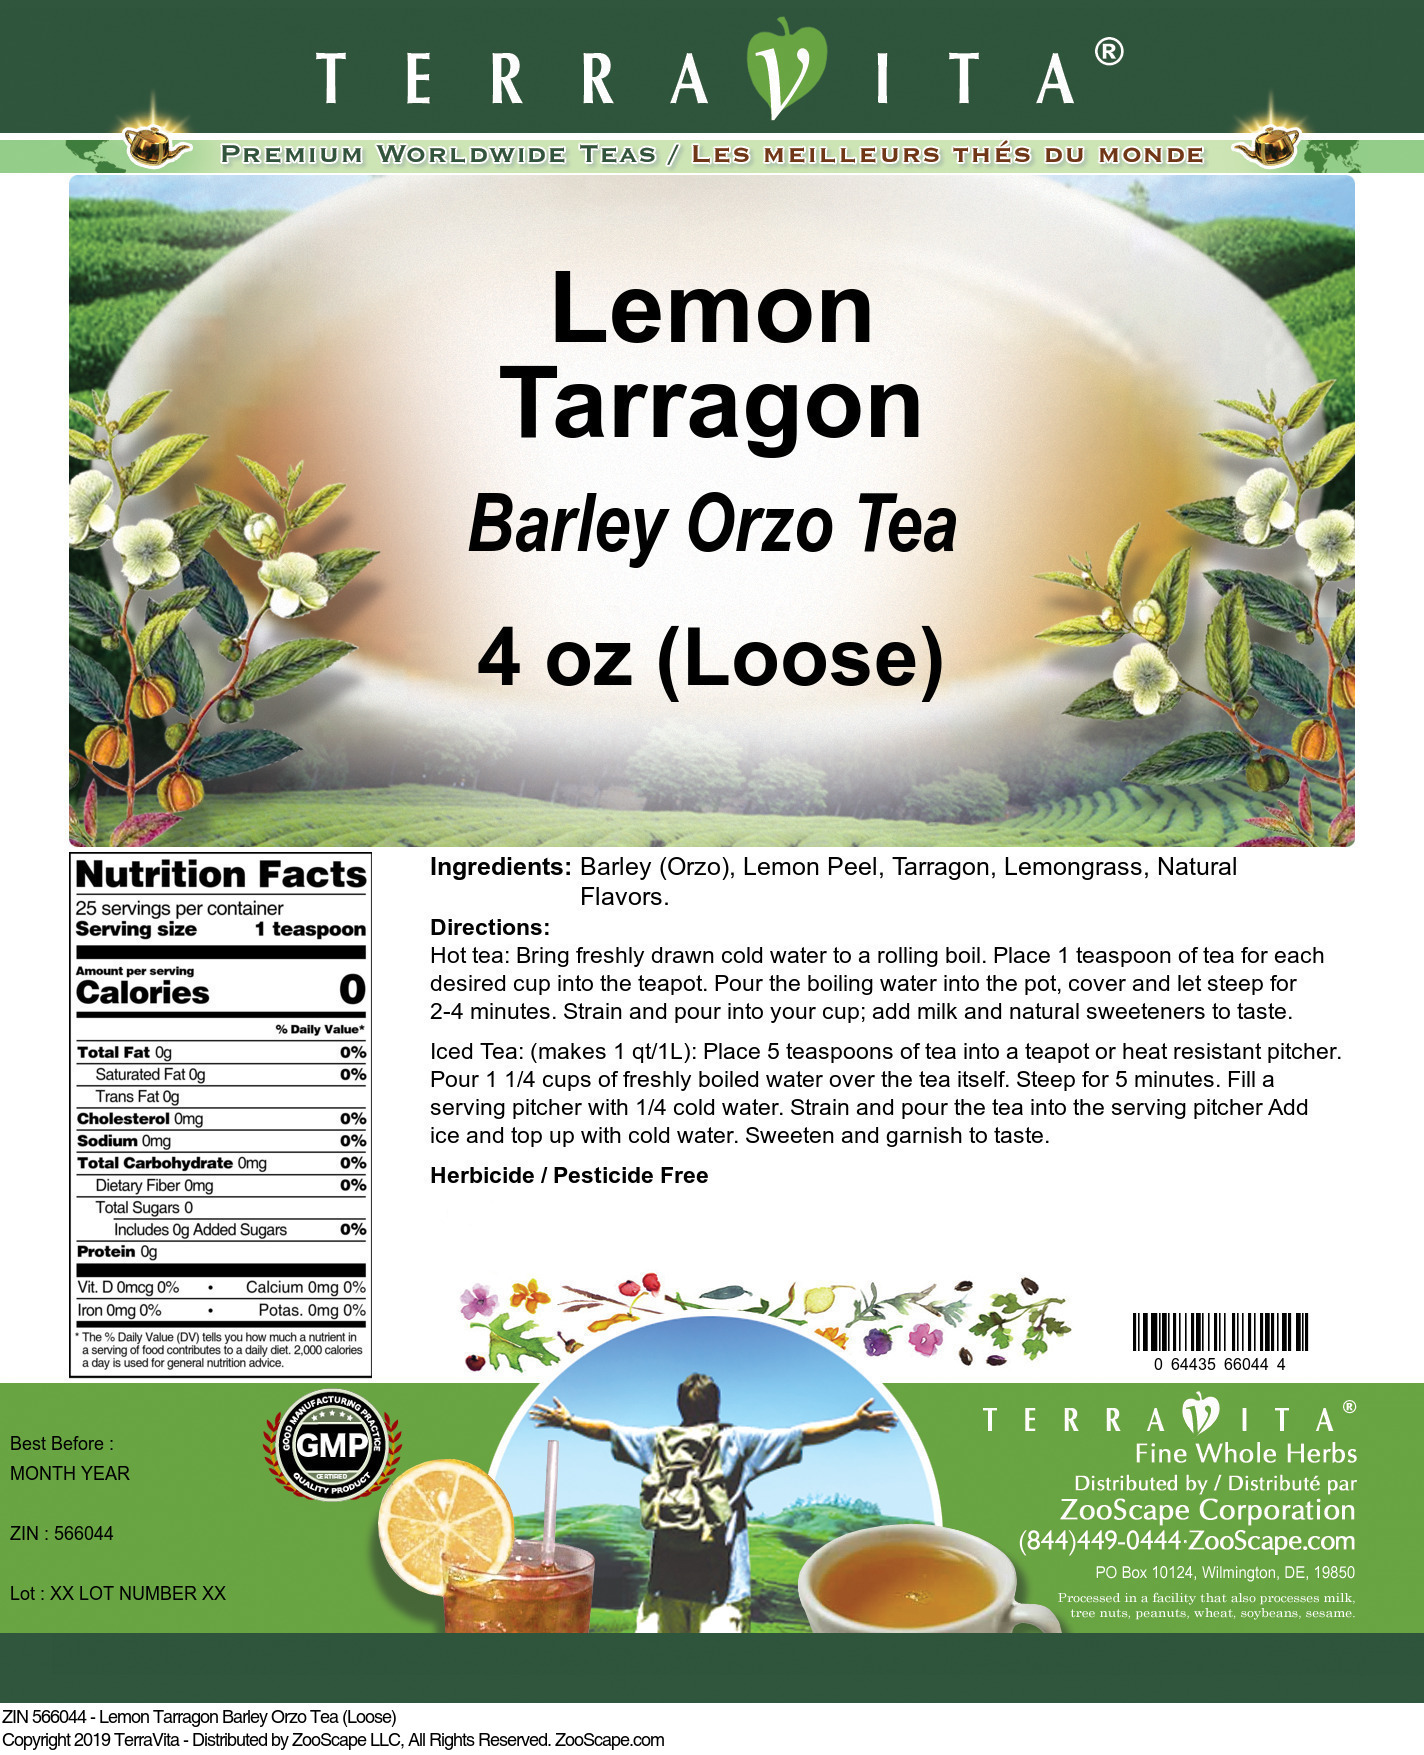 Lemon Tarragon Barley Orzo Tea (Loose) - Label